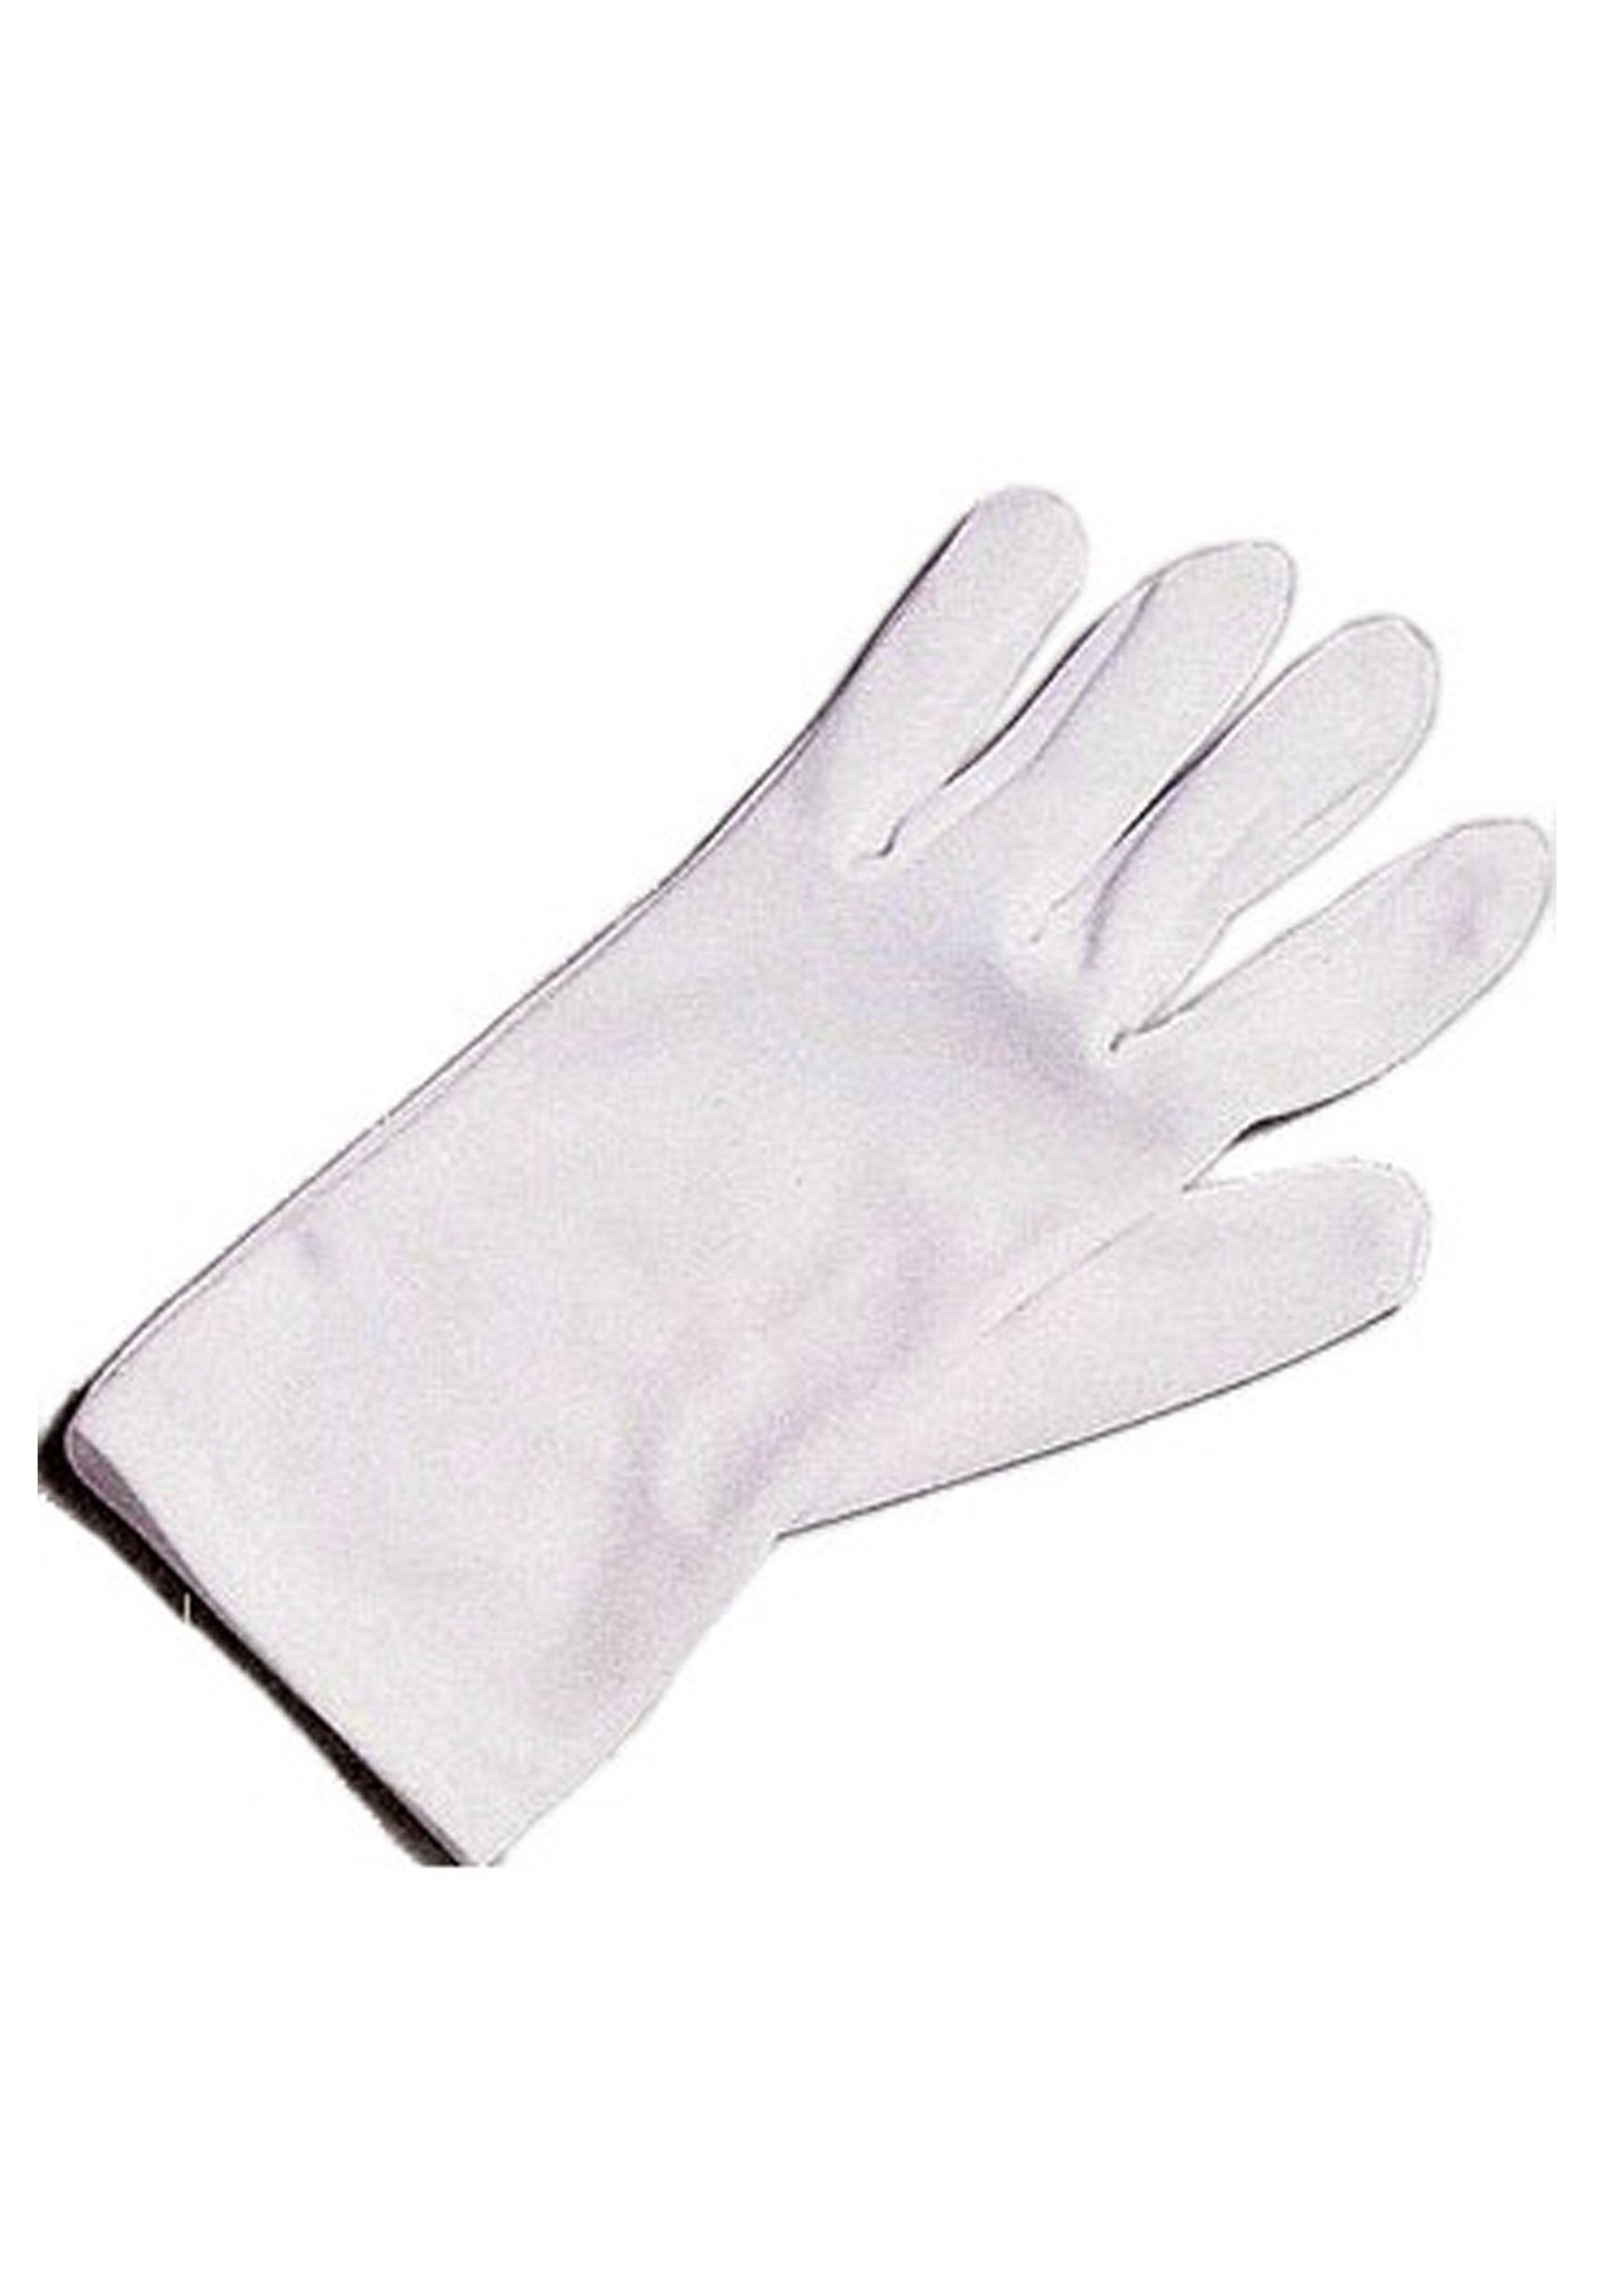 Superhero White Unisex Gloves